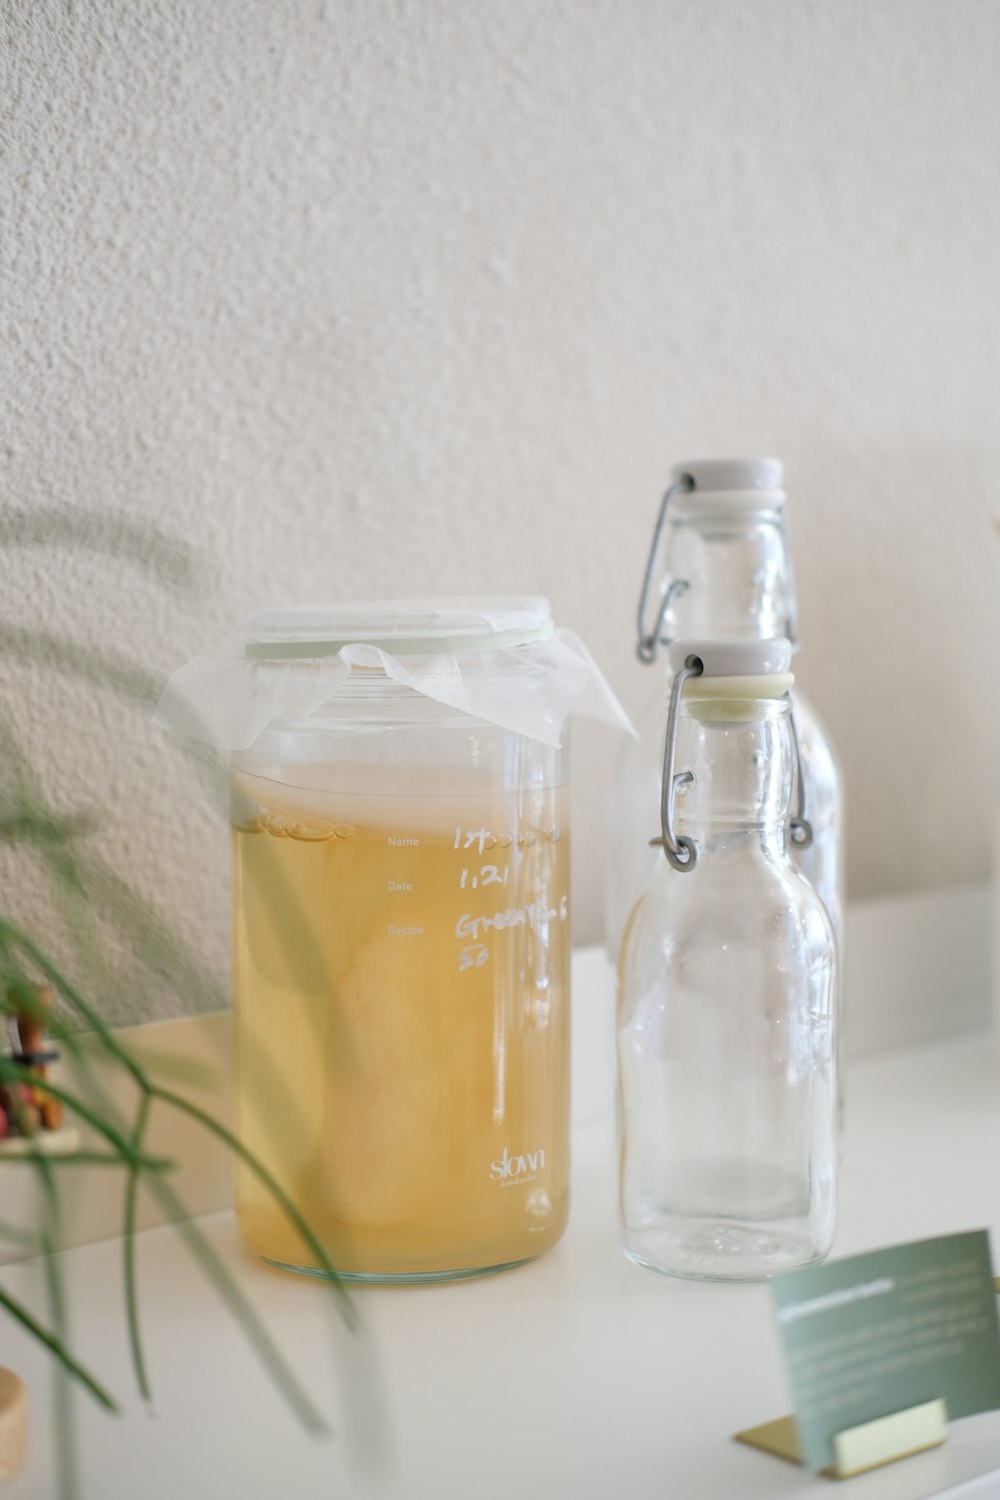 a jar of liquid next to a glass bottle of liquid